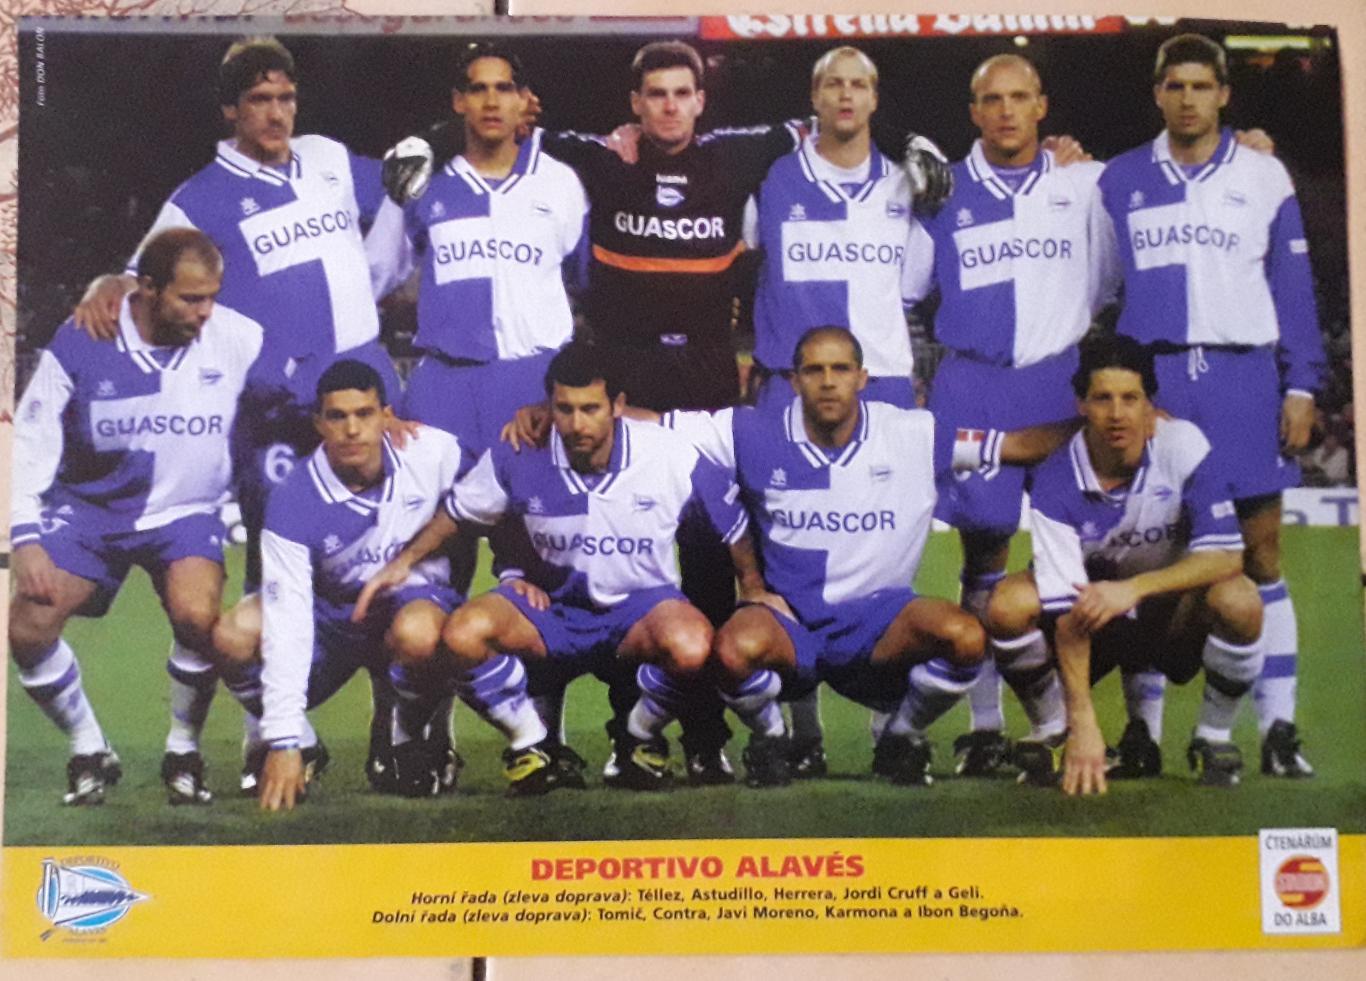 Deportivo Alaves. Плакат формата А4 из журнала Stadion.